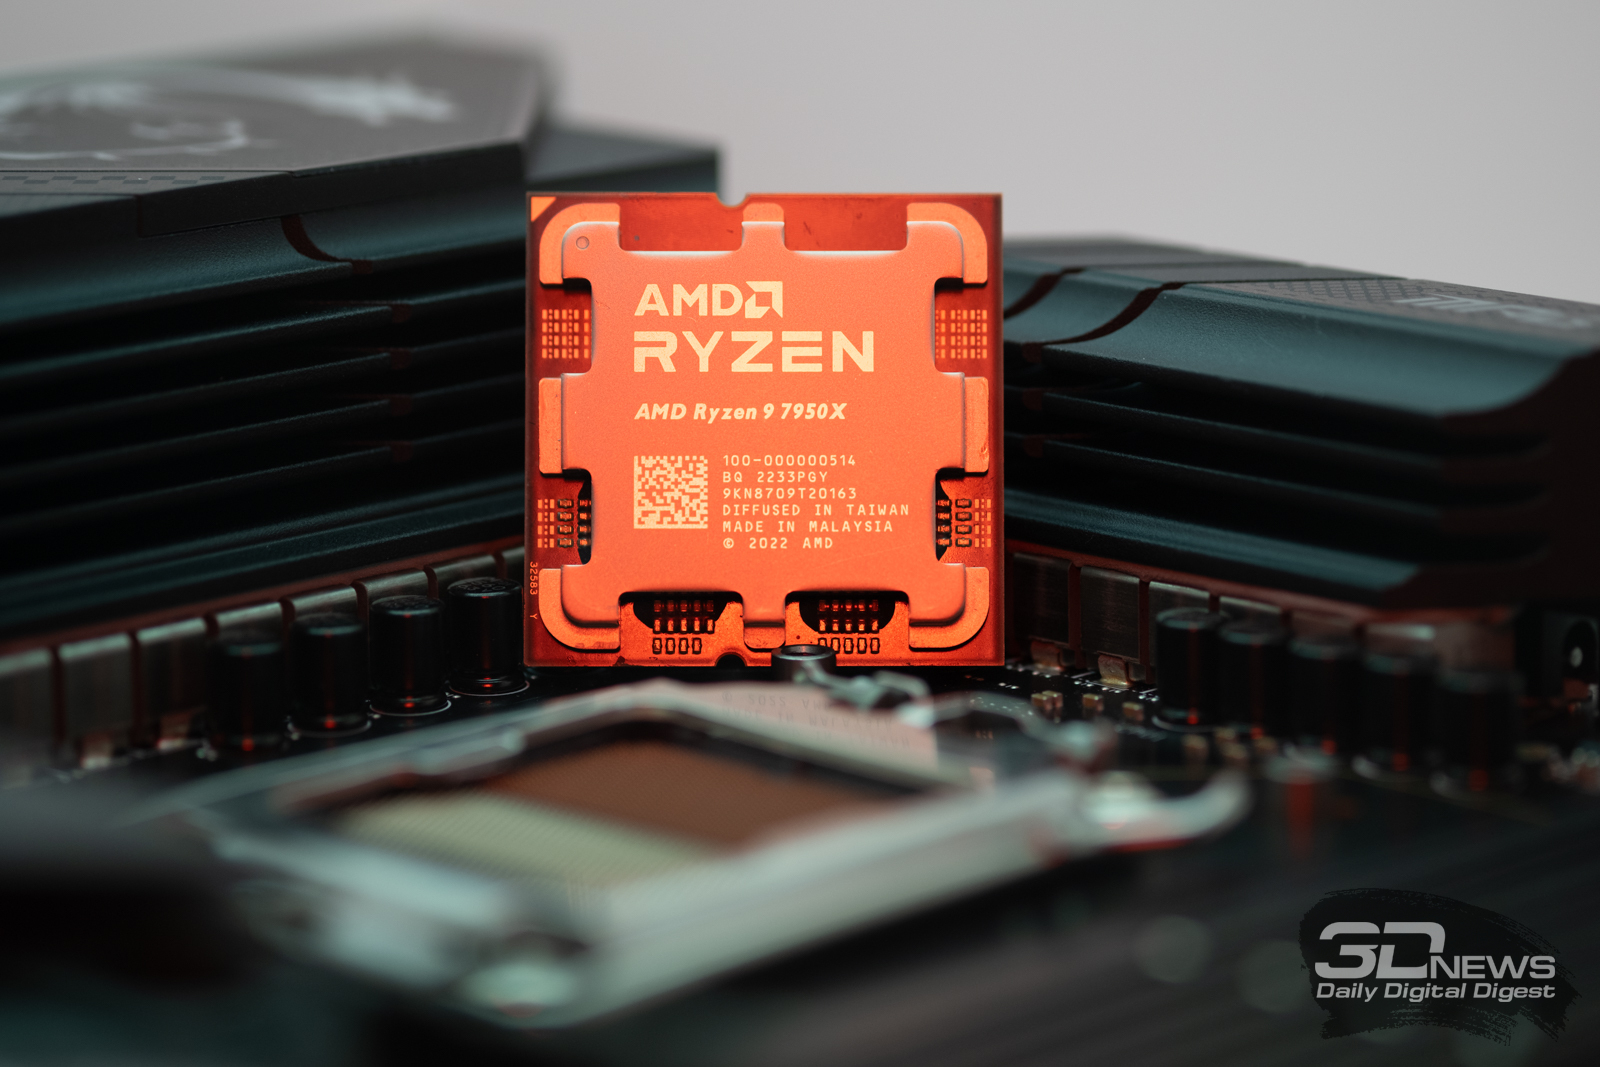 Ryzen 9 7950x3d купить. Ryzen 9 7950x3d. Ryzen 7 7950x. Процессор AMD Ryzen 9 7950x Box. Ryzen 9 7950x кулер.